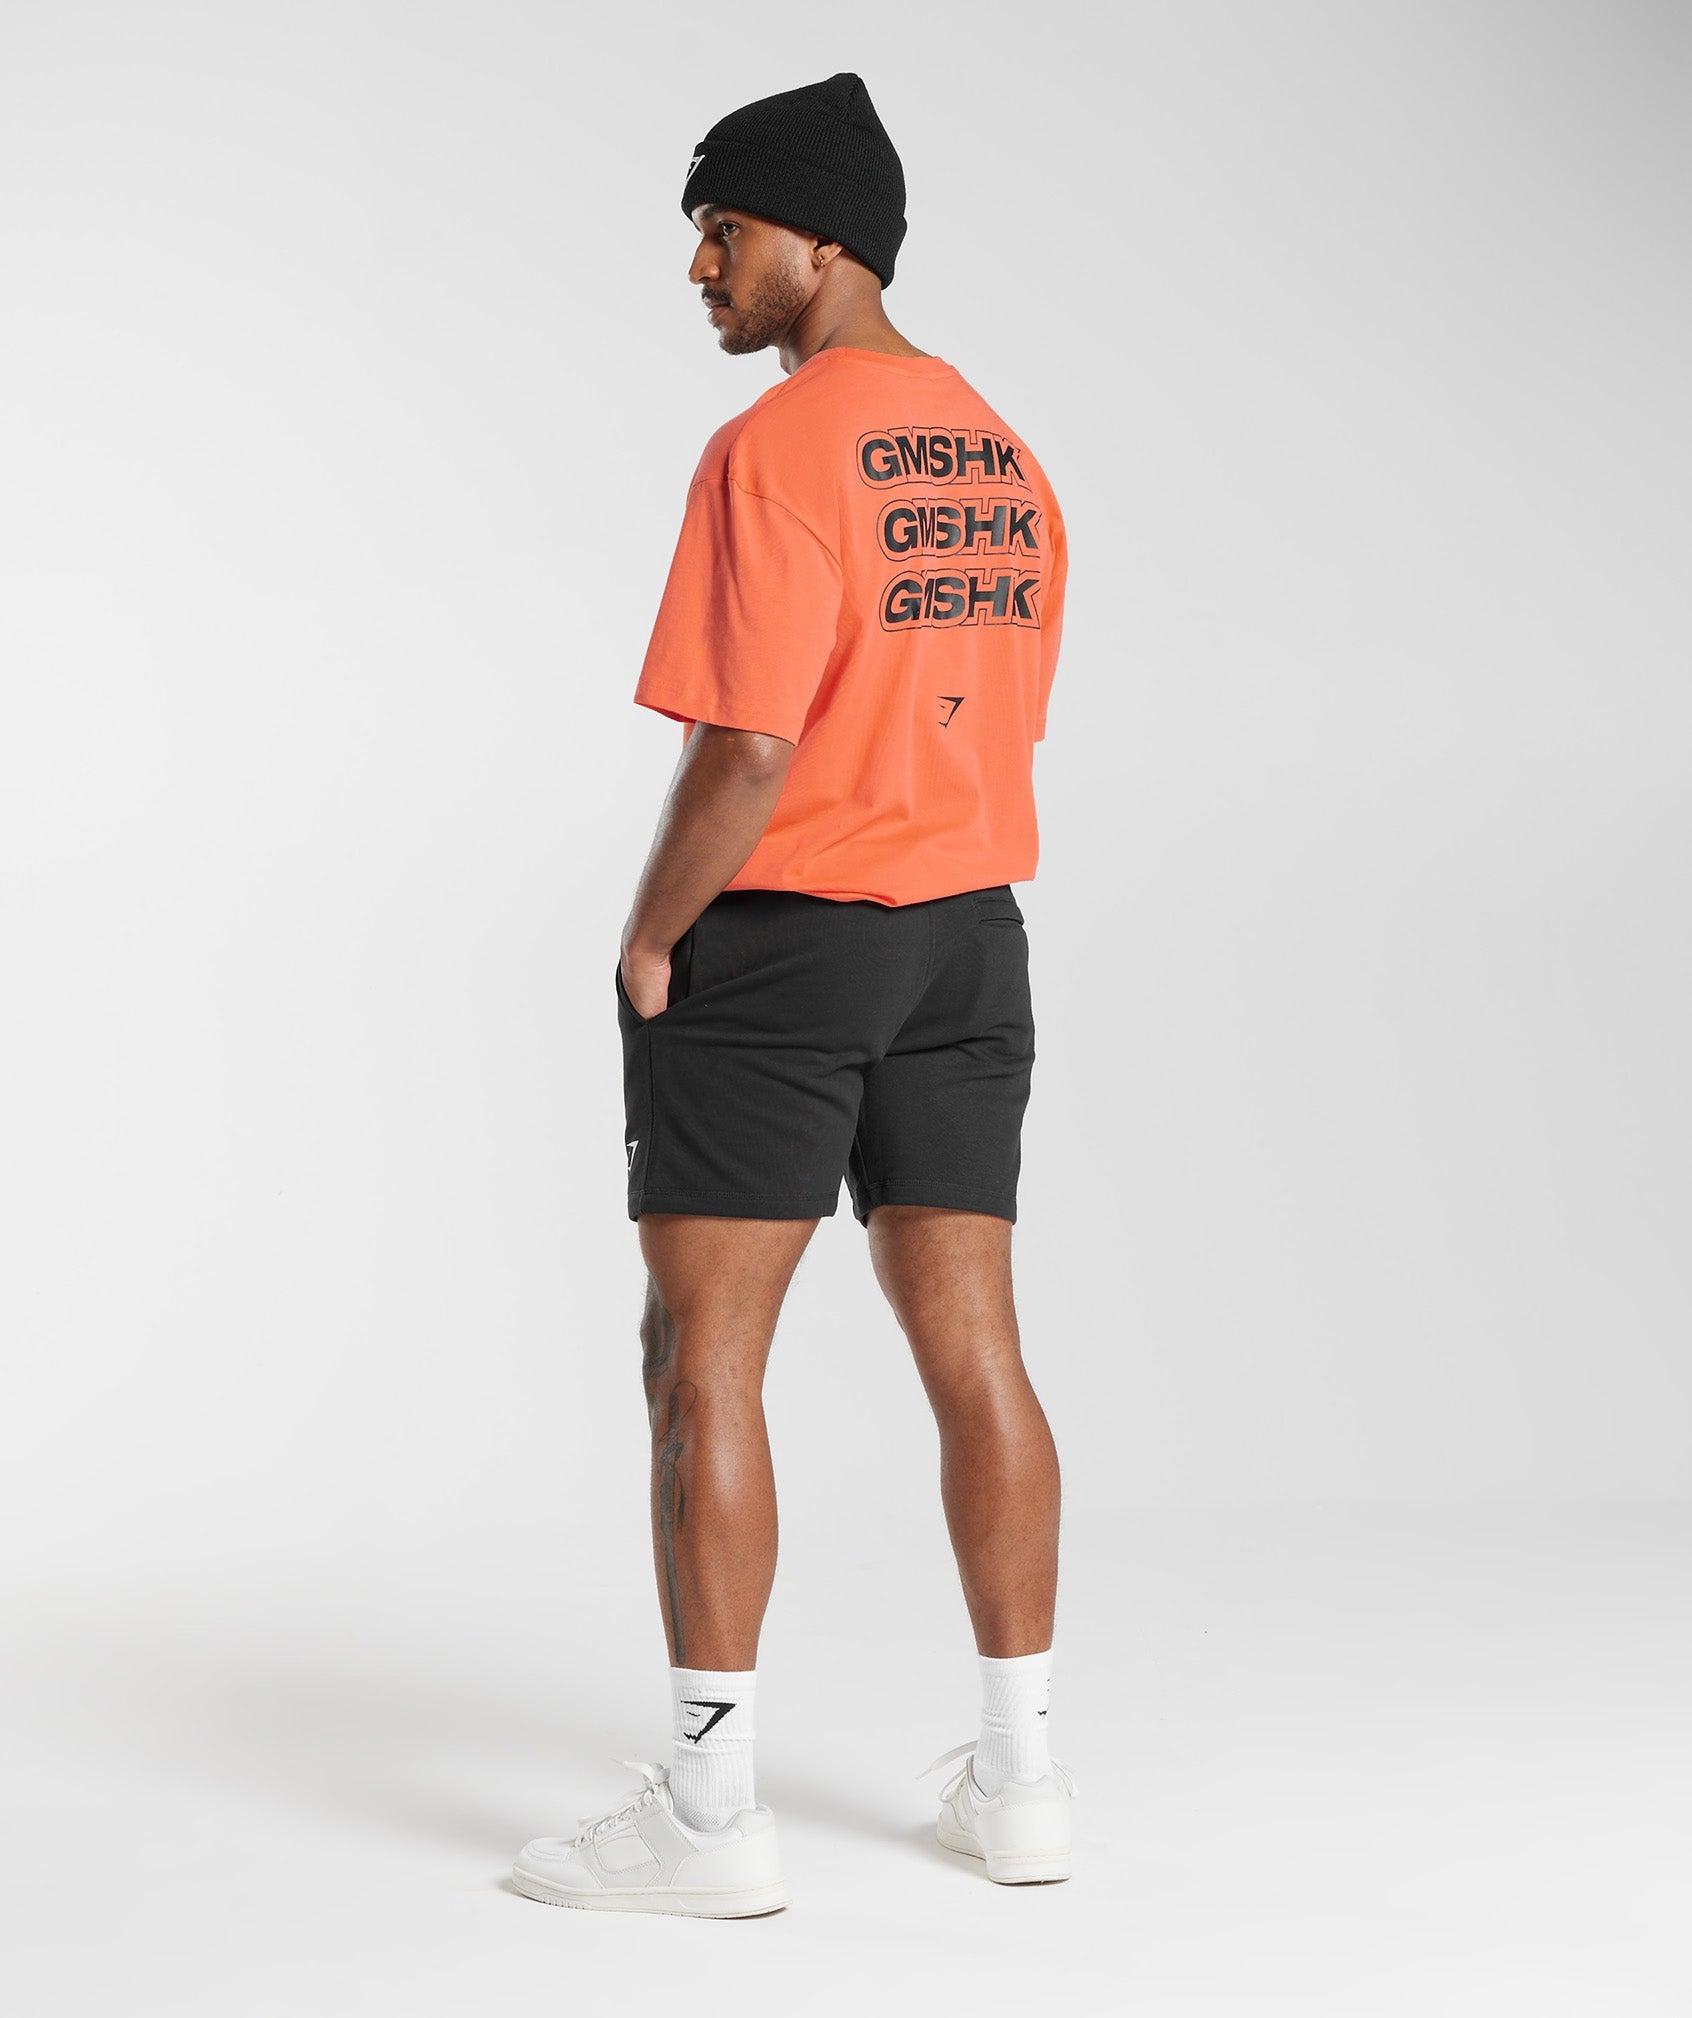 GMSHK Oversized T-Shirt in Solstice Orange